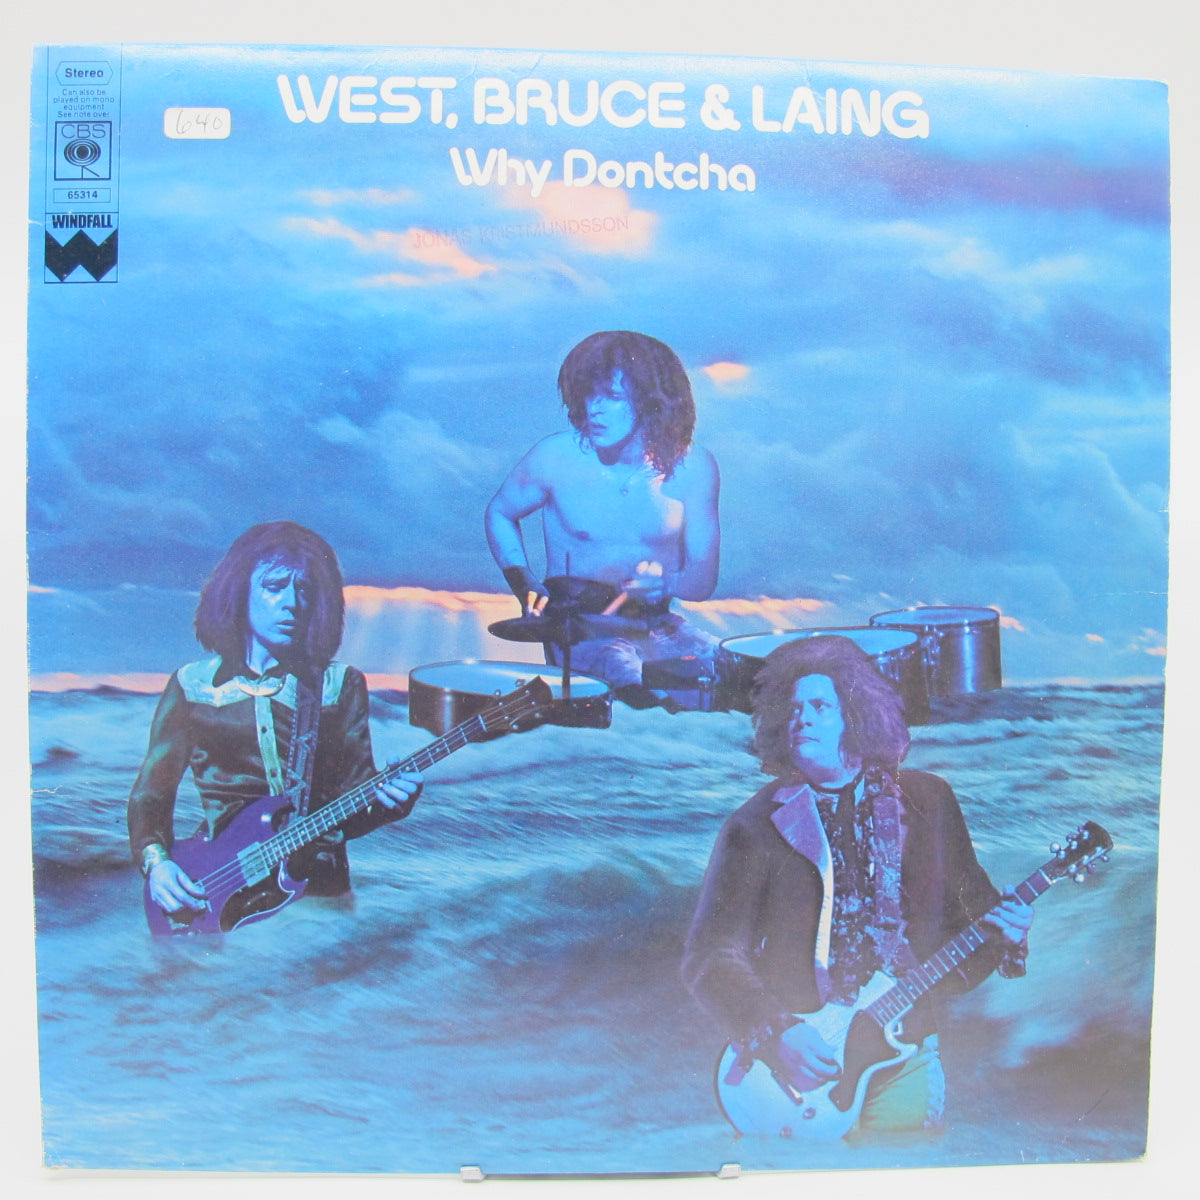 West, Bruce & Laing - Why Dontcha (Notuð plata VG)